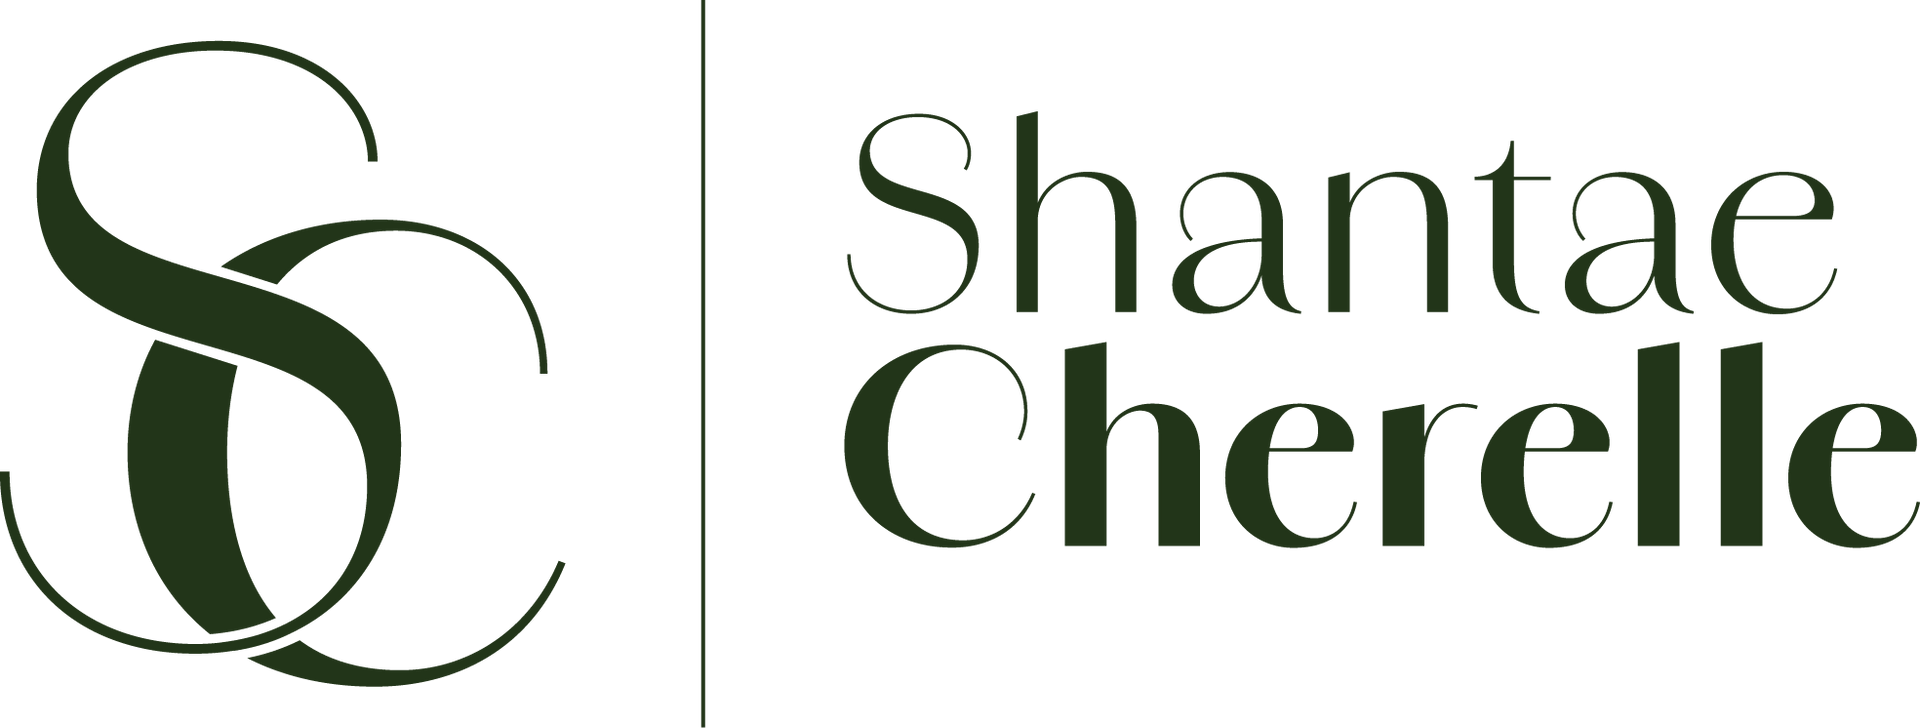 Shantae Cherelle